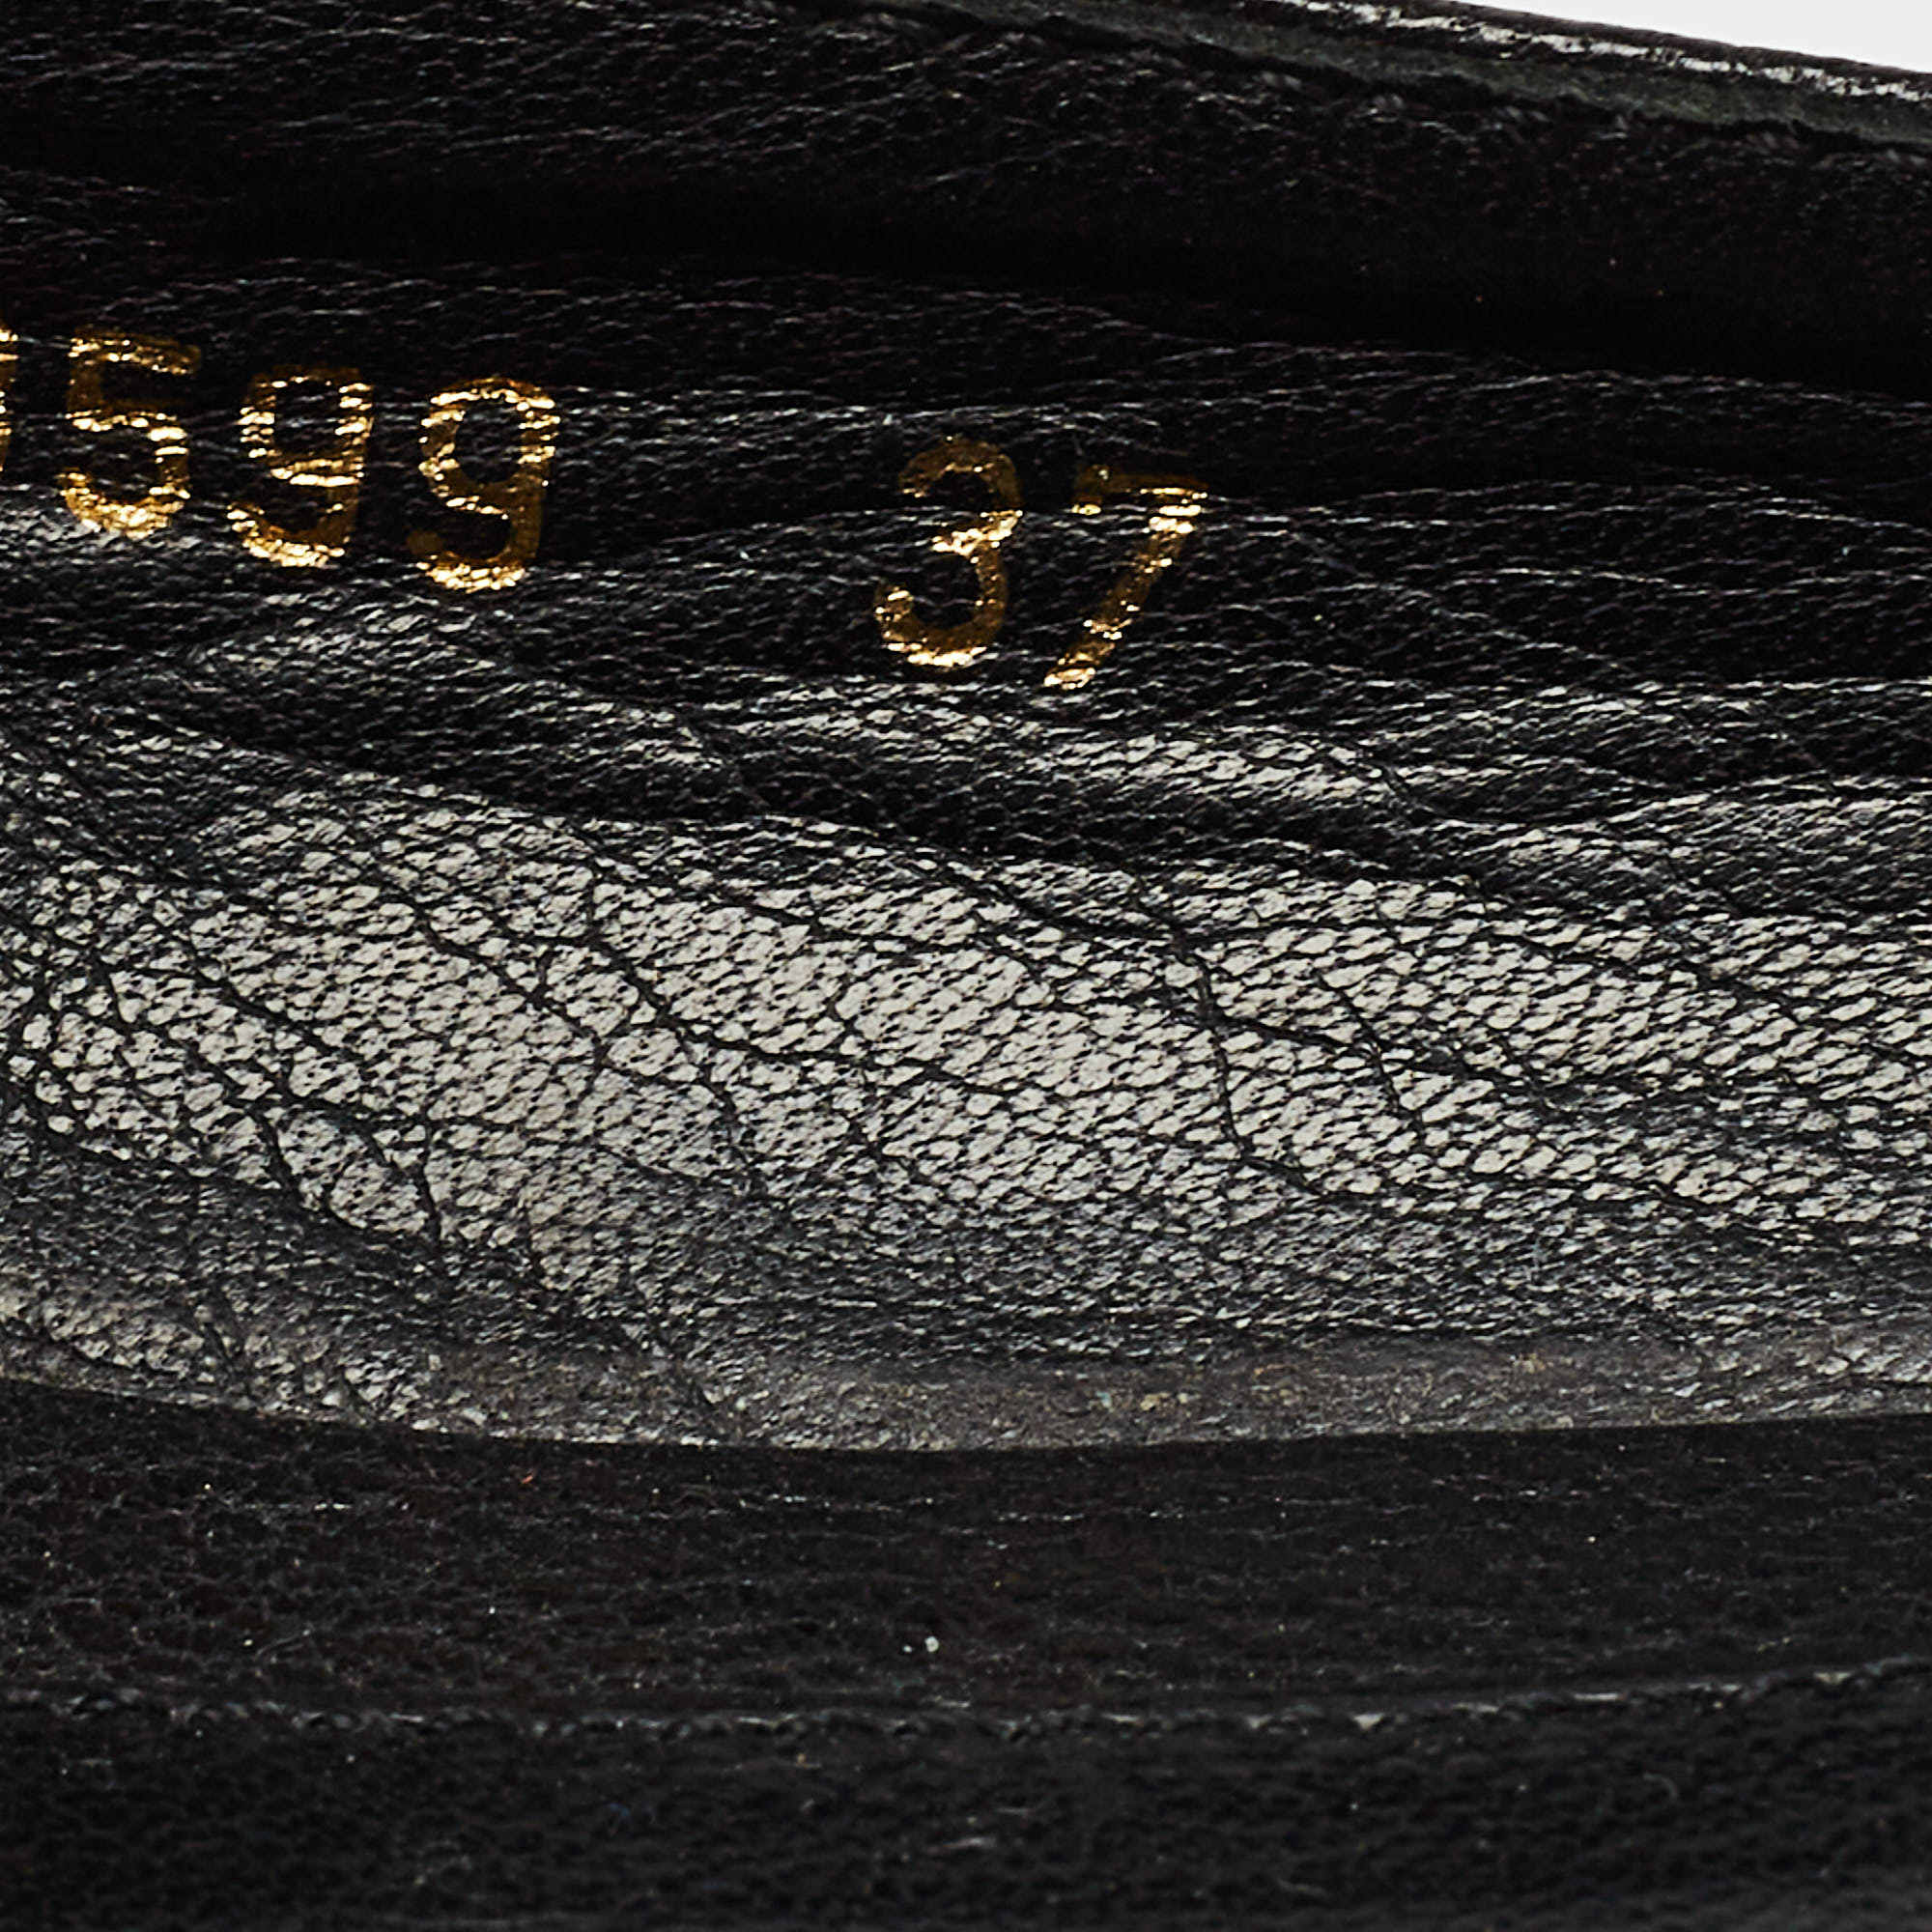 Alexander McQueen Black Leather Skull Ballet Flats Size 37